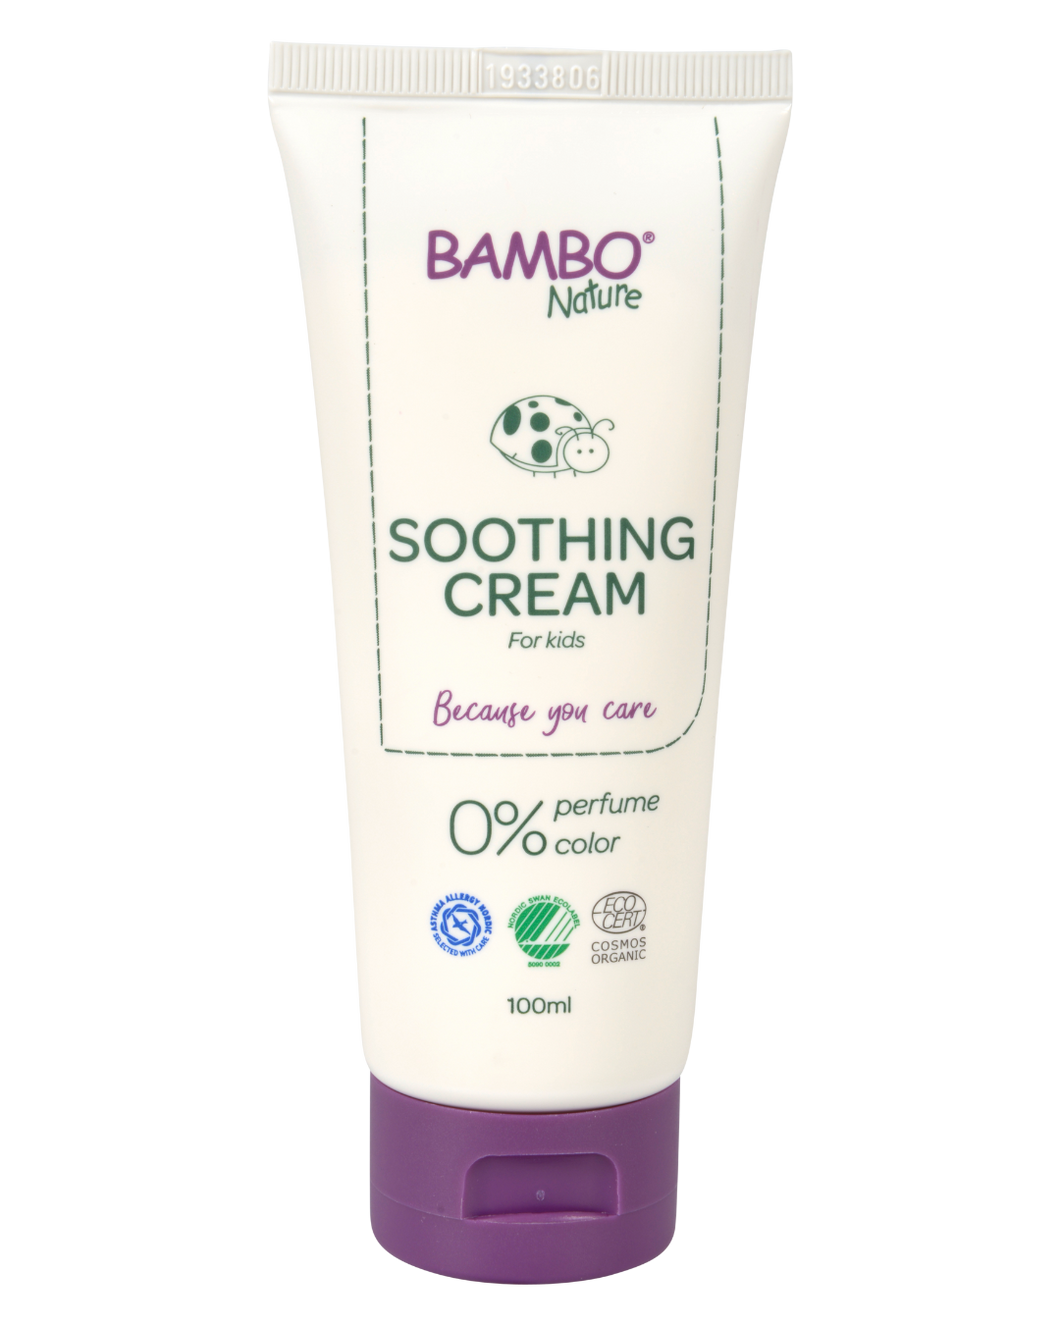 Bambo Nature Soothing Cream